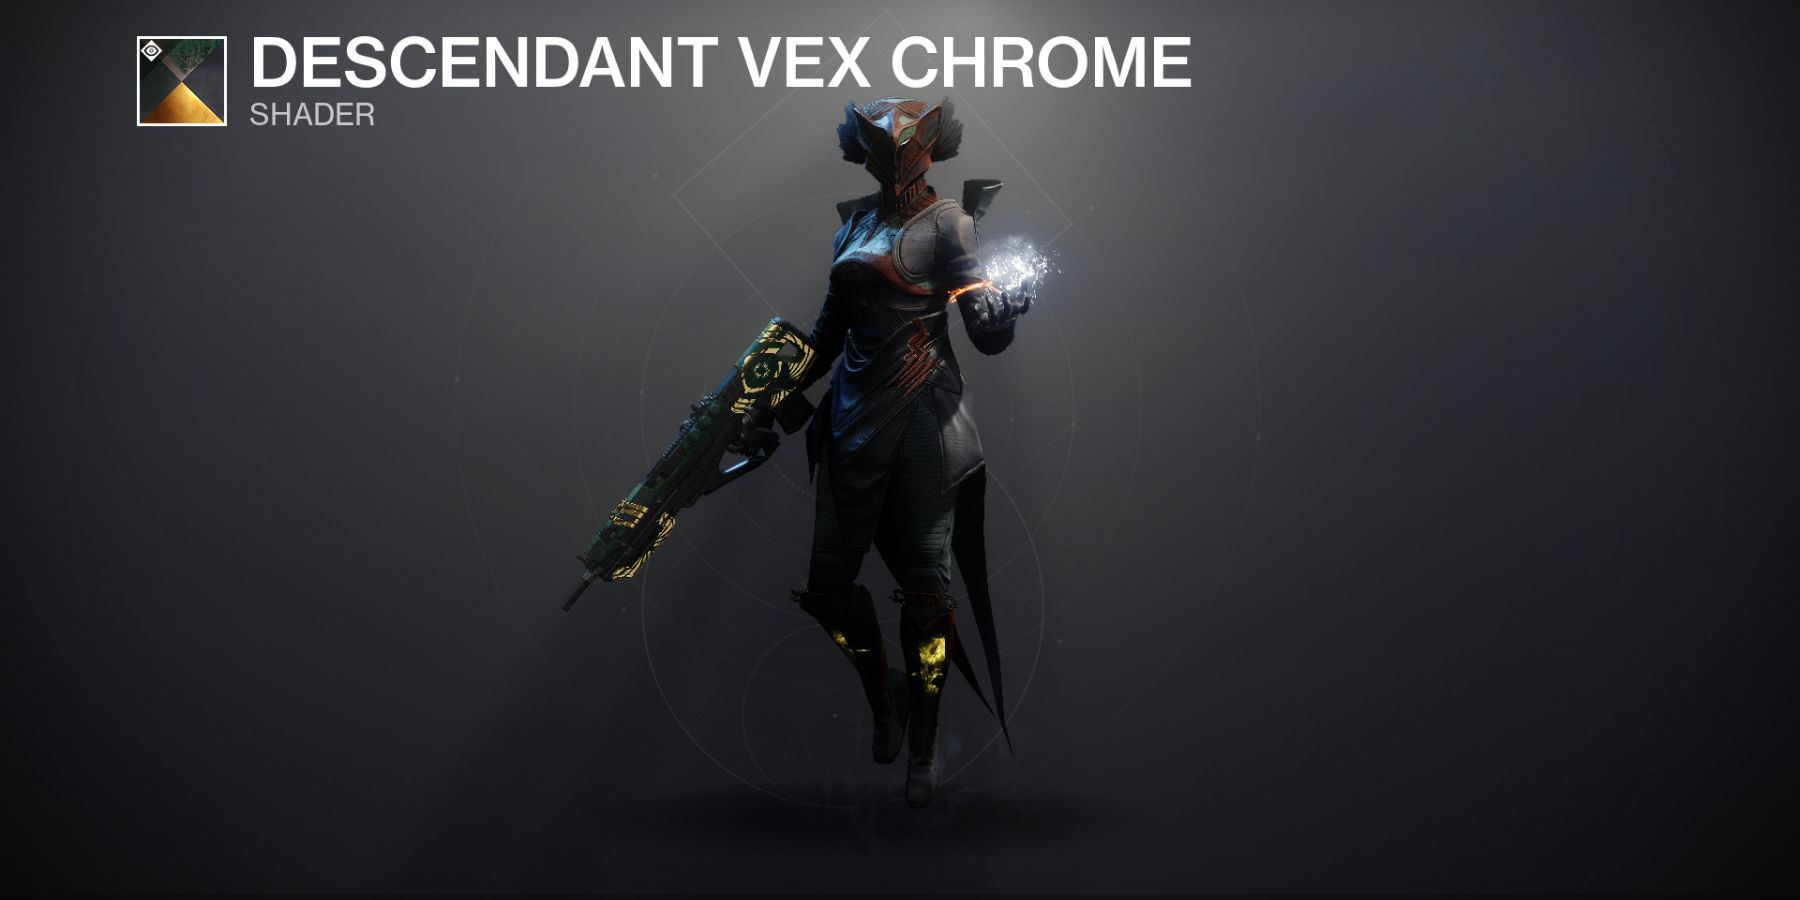 Destiny 2 Descendant Vex Chrome Shader